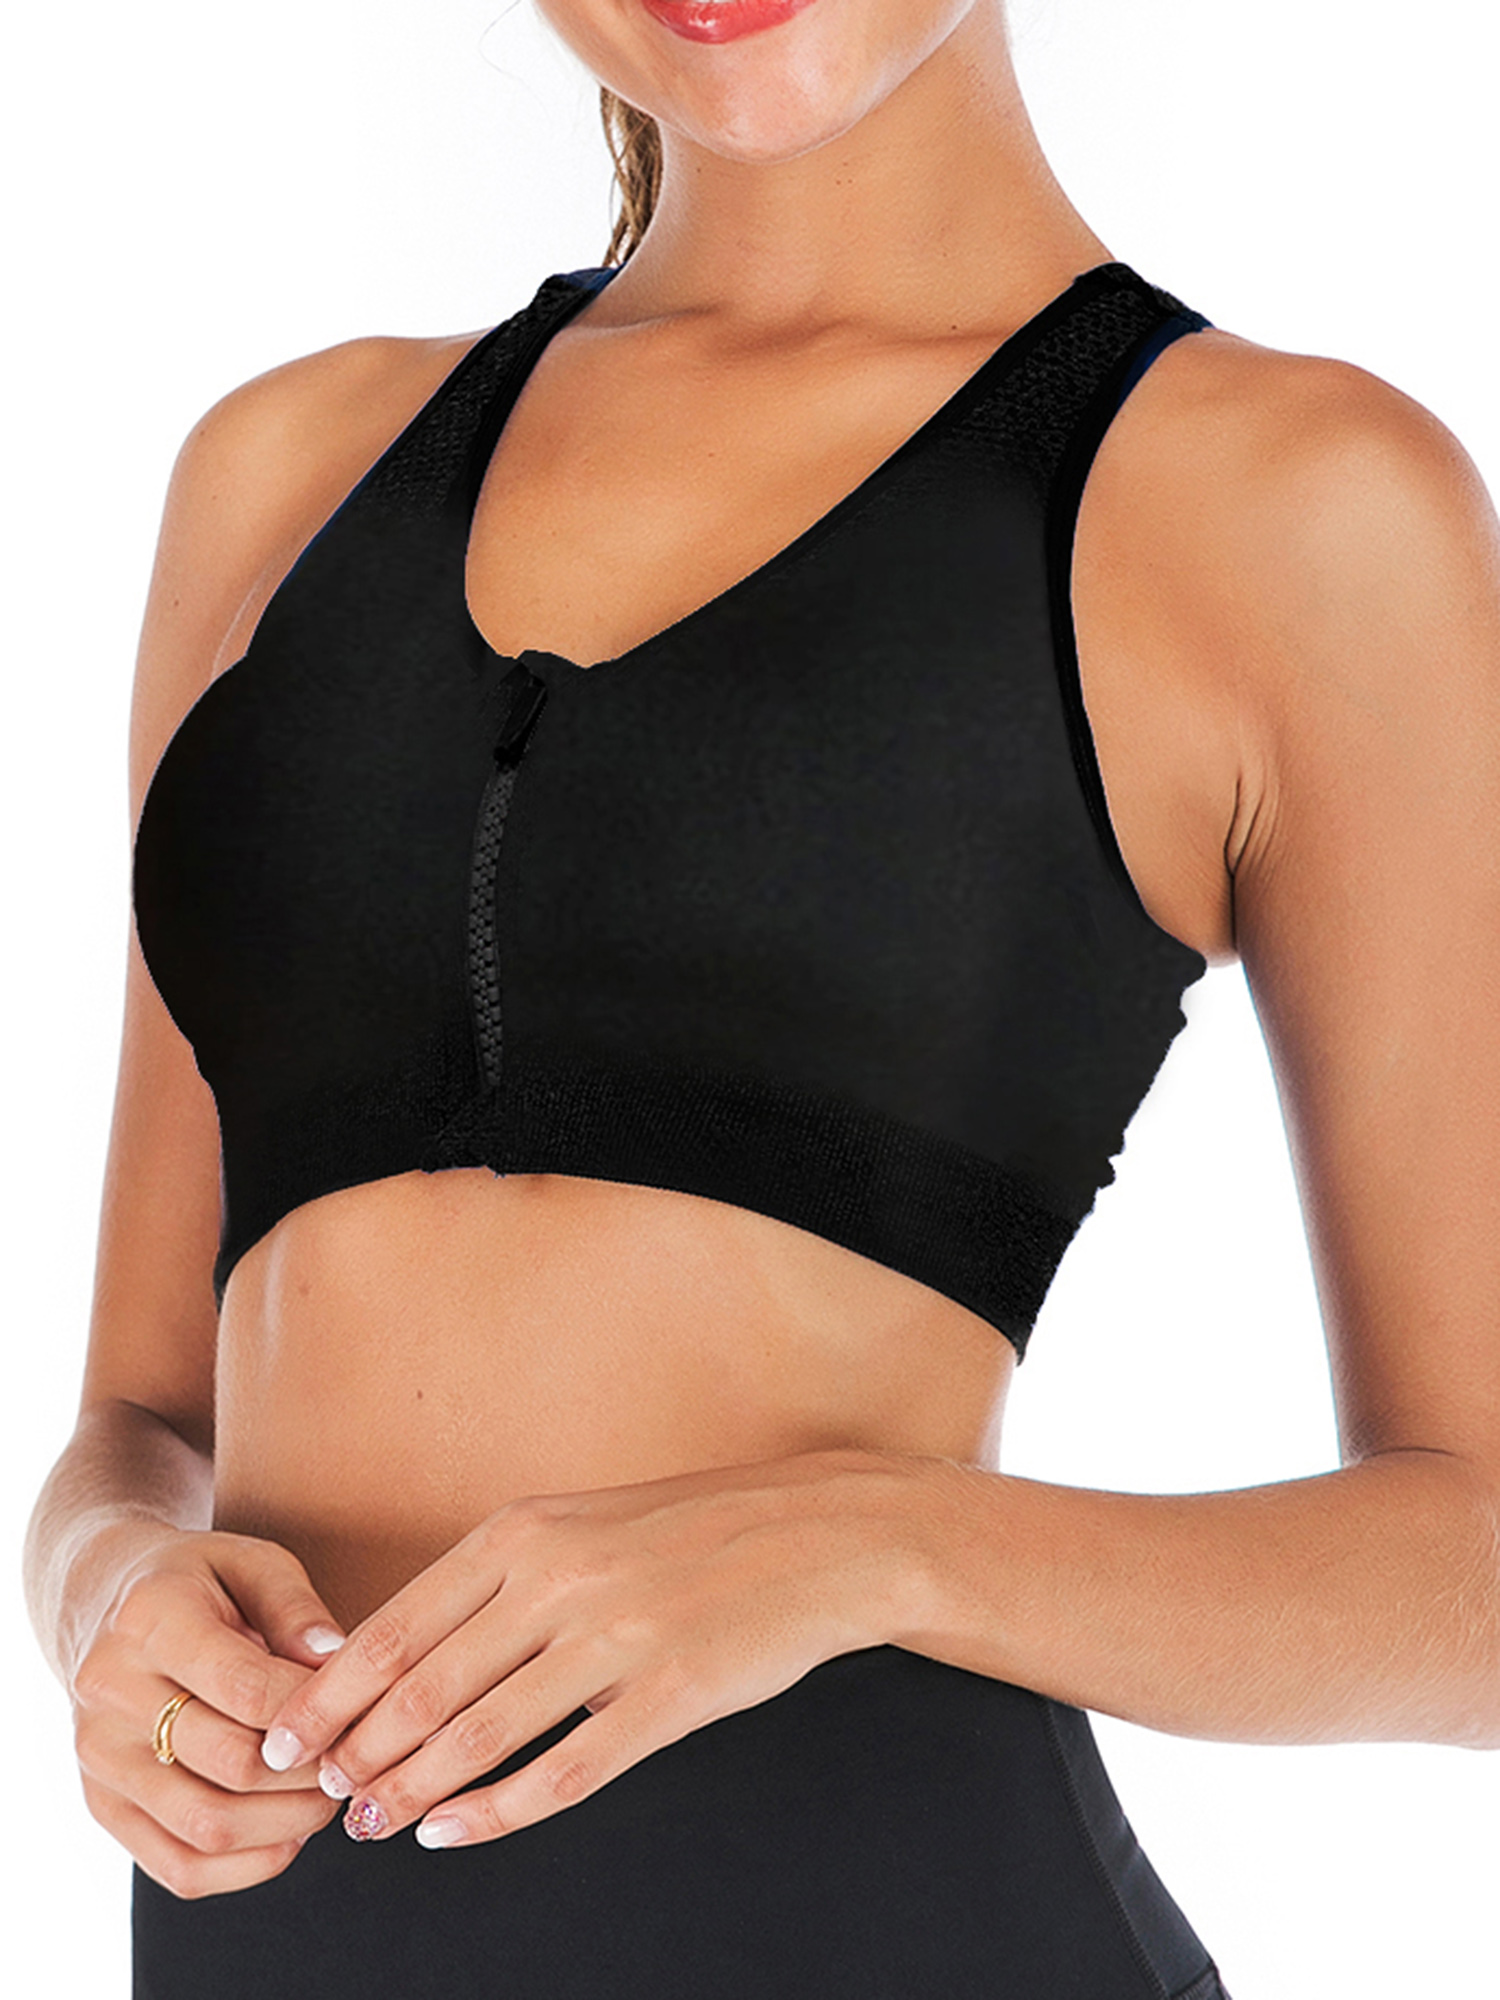 FUTATA Womens Post Op Bras Racerback Sports Bras Comfort High Impact Workout Activewear Tops Zipper Front Close Post-Surgery Bra - image 2 of 7